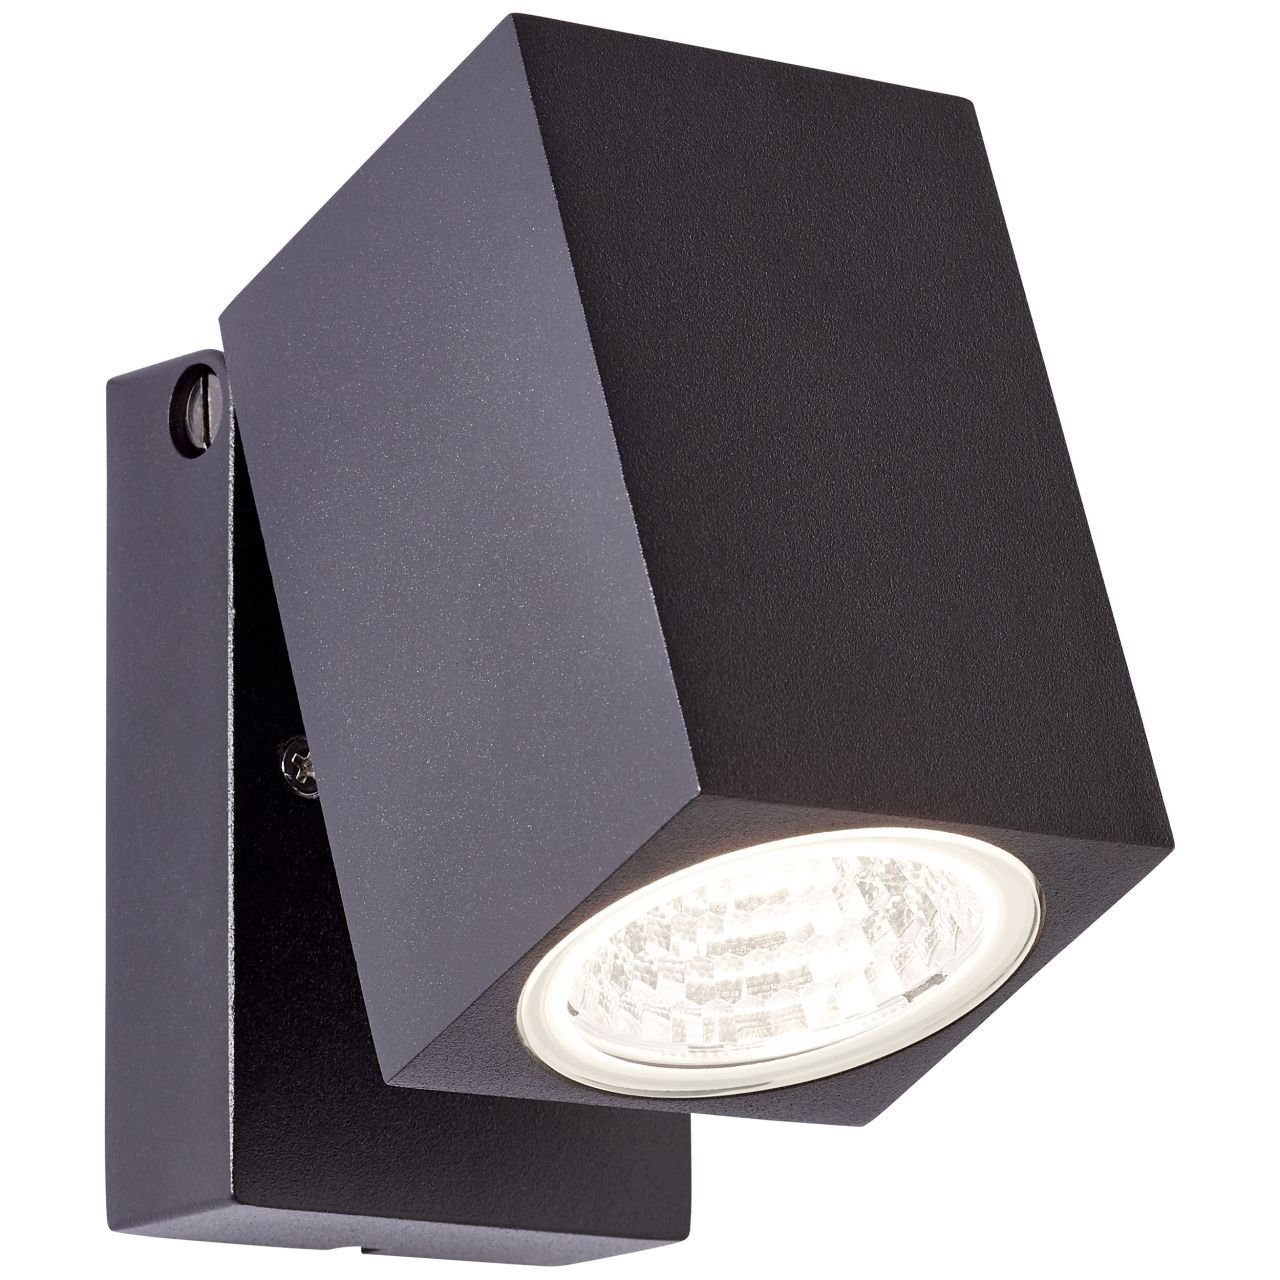 Burk, Burk LED Außen-Wandleuchte integri integriert, LED LED 1x Brilliant LED 6W Außenwandstrahler schwarz